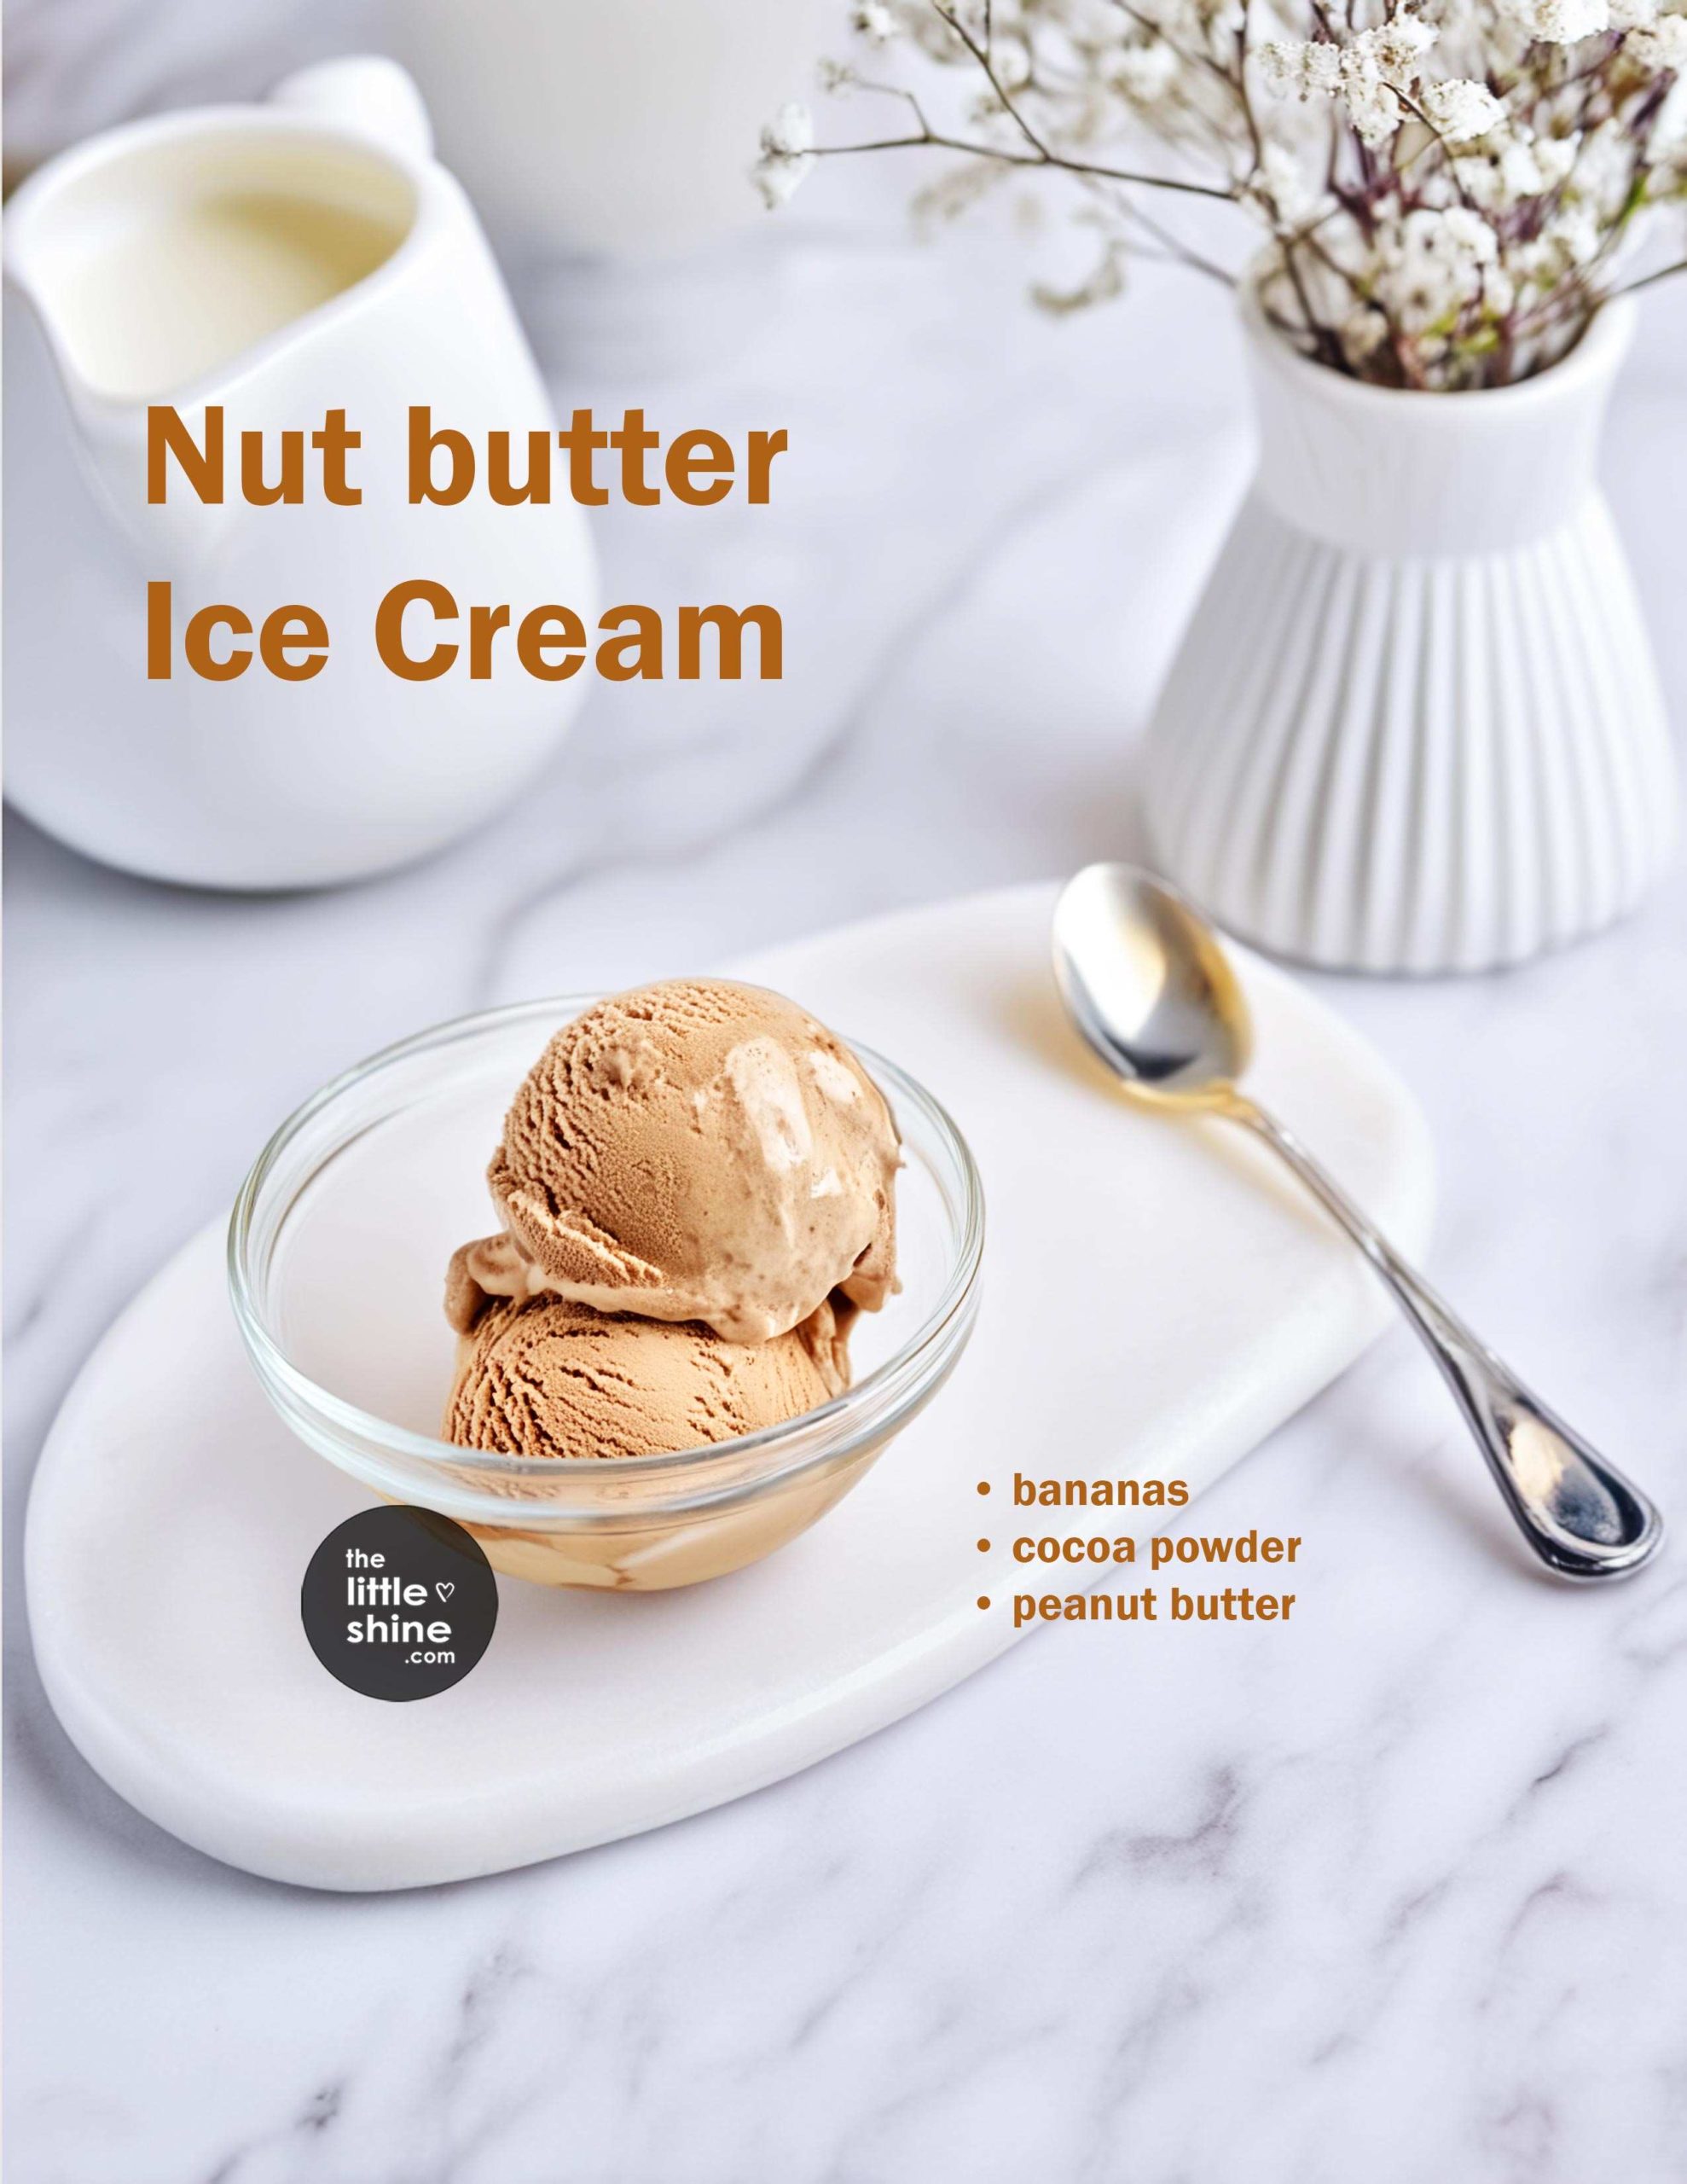 Peanut butter Ice Cream